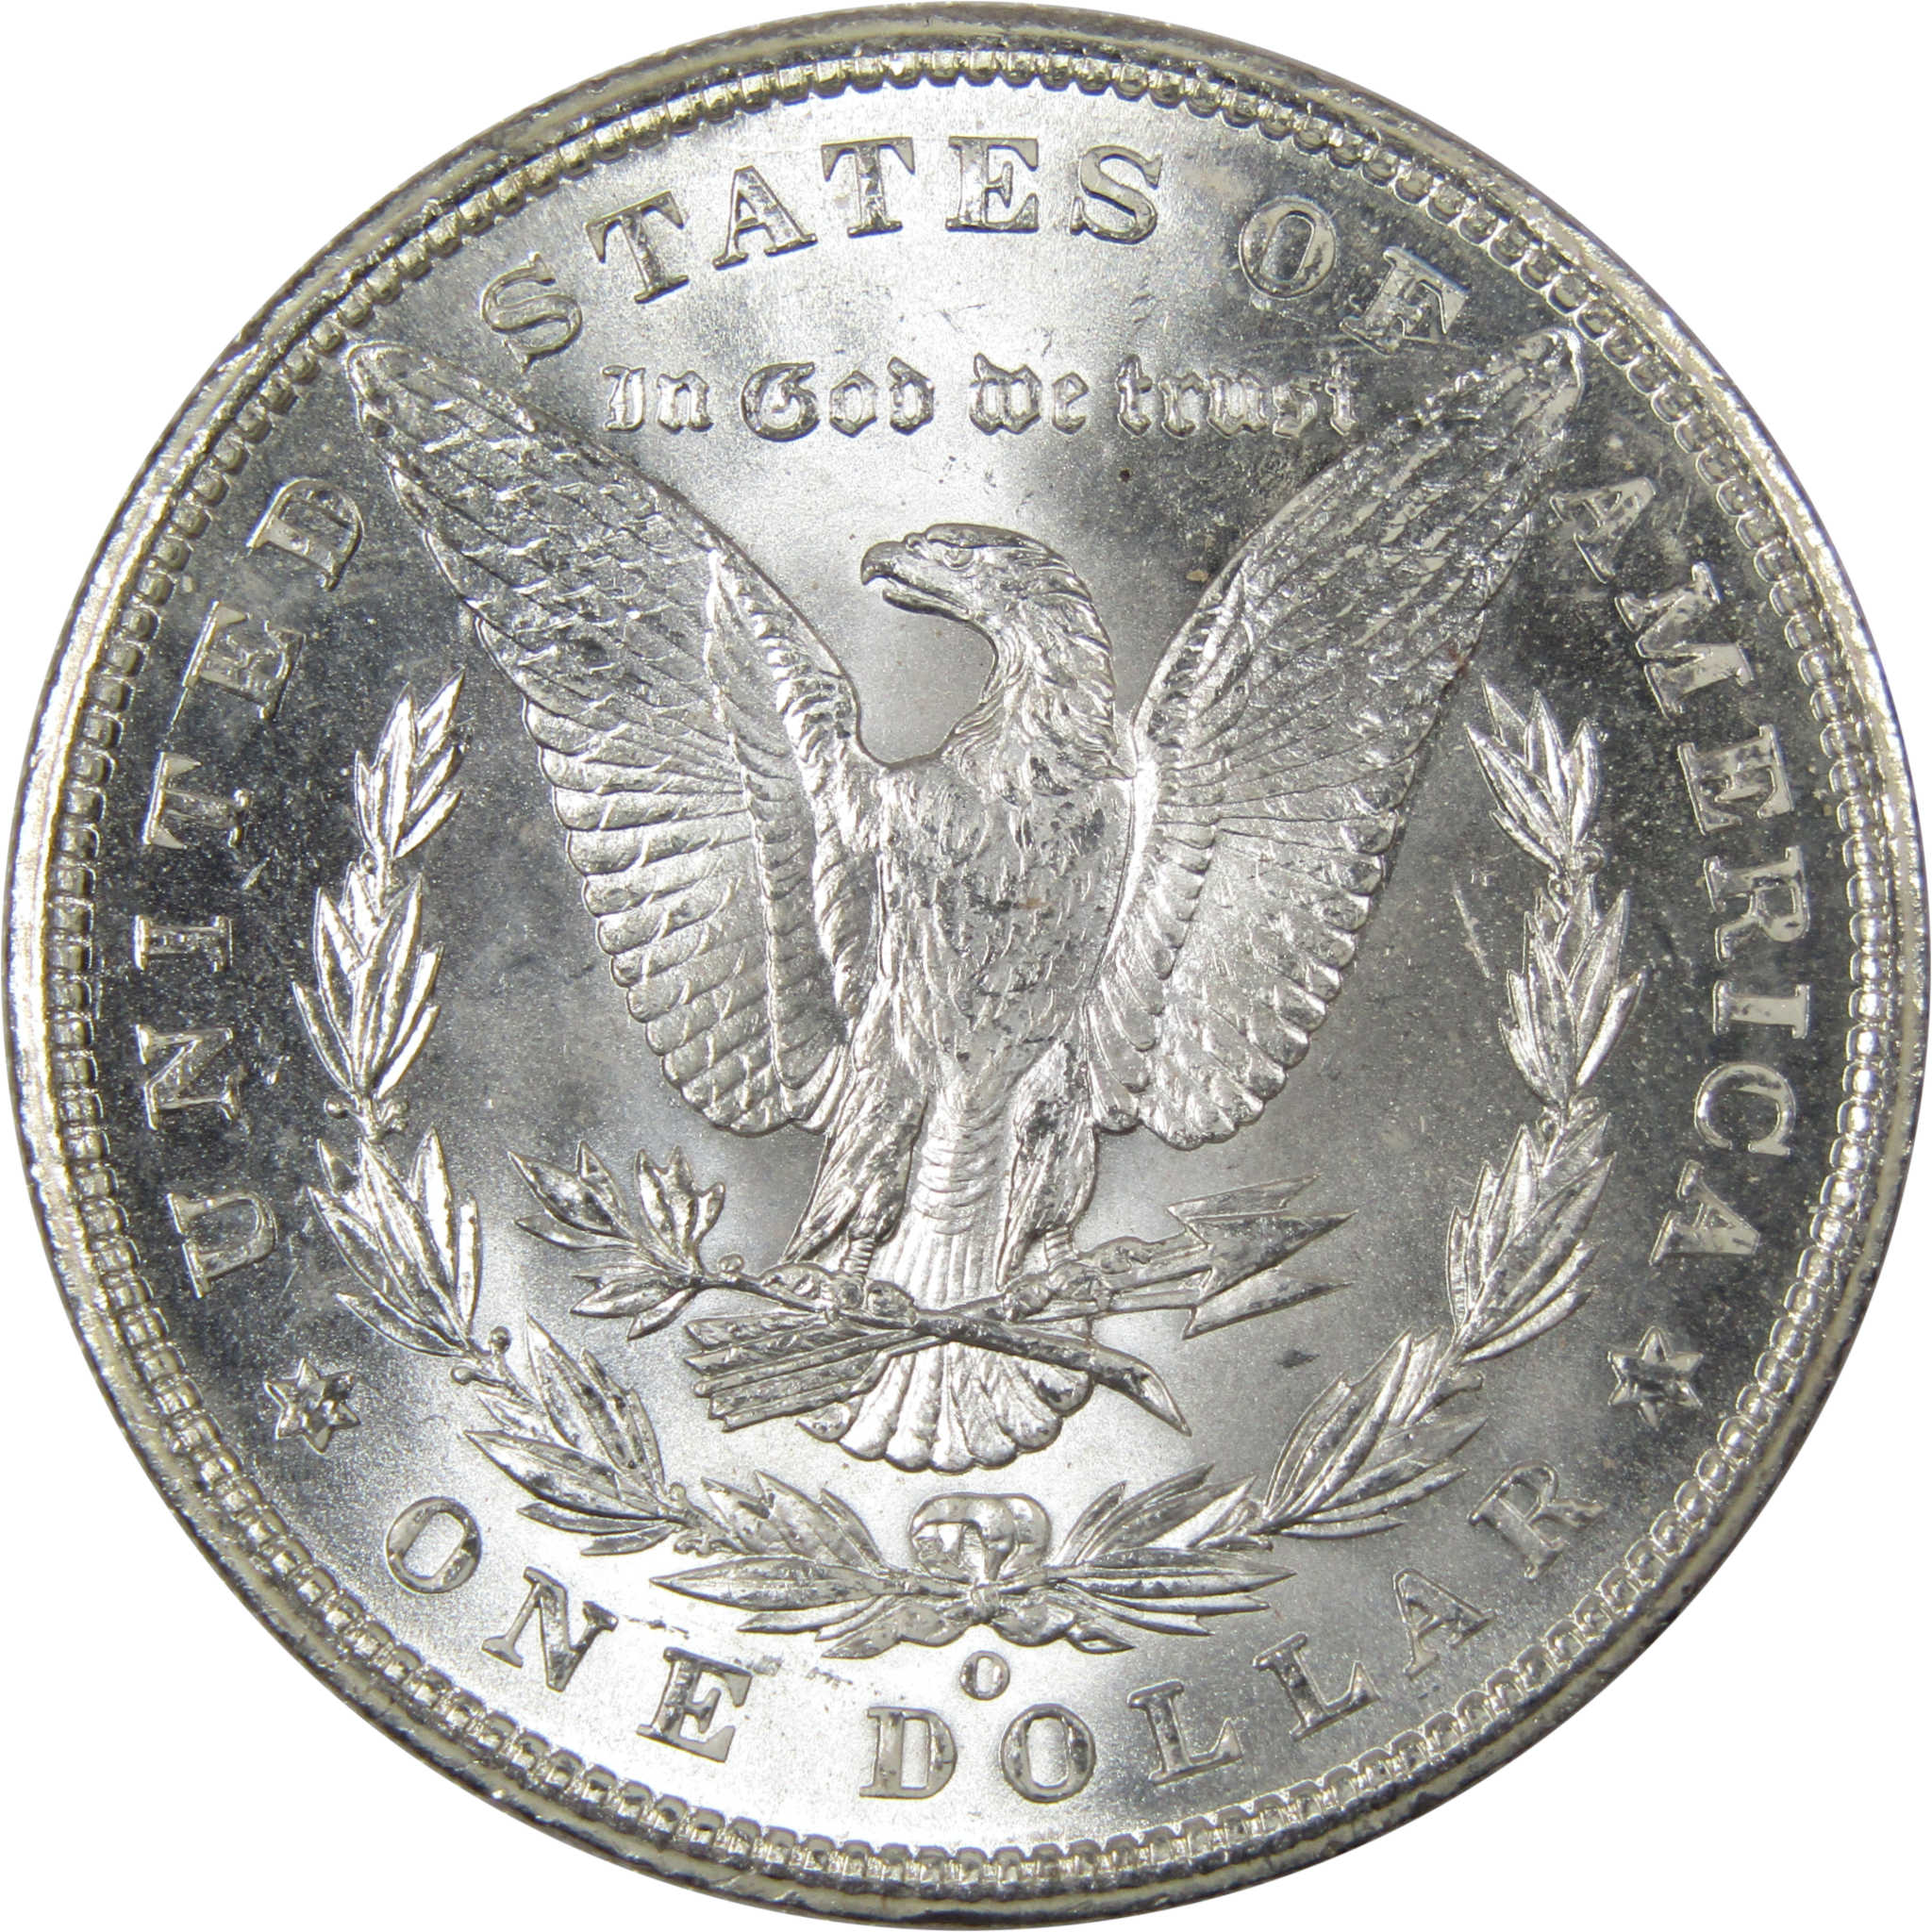 1900 O Morgan Dollar BU Uncirculated Mint State 90% Silver SKU:IPC9783 - Morgan coin - Morgan silver dollar - Morgan silver dollar for sale - Profile Coins &amp; Collectibles